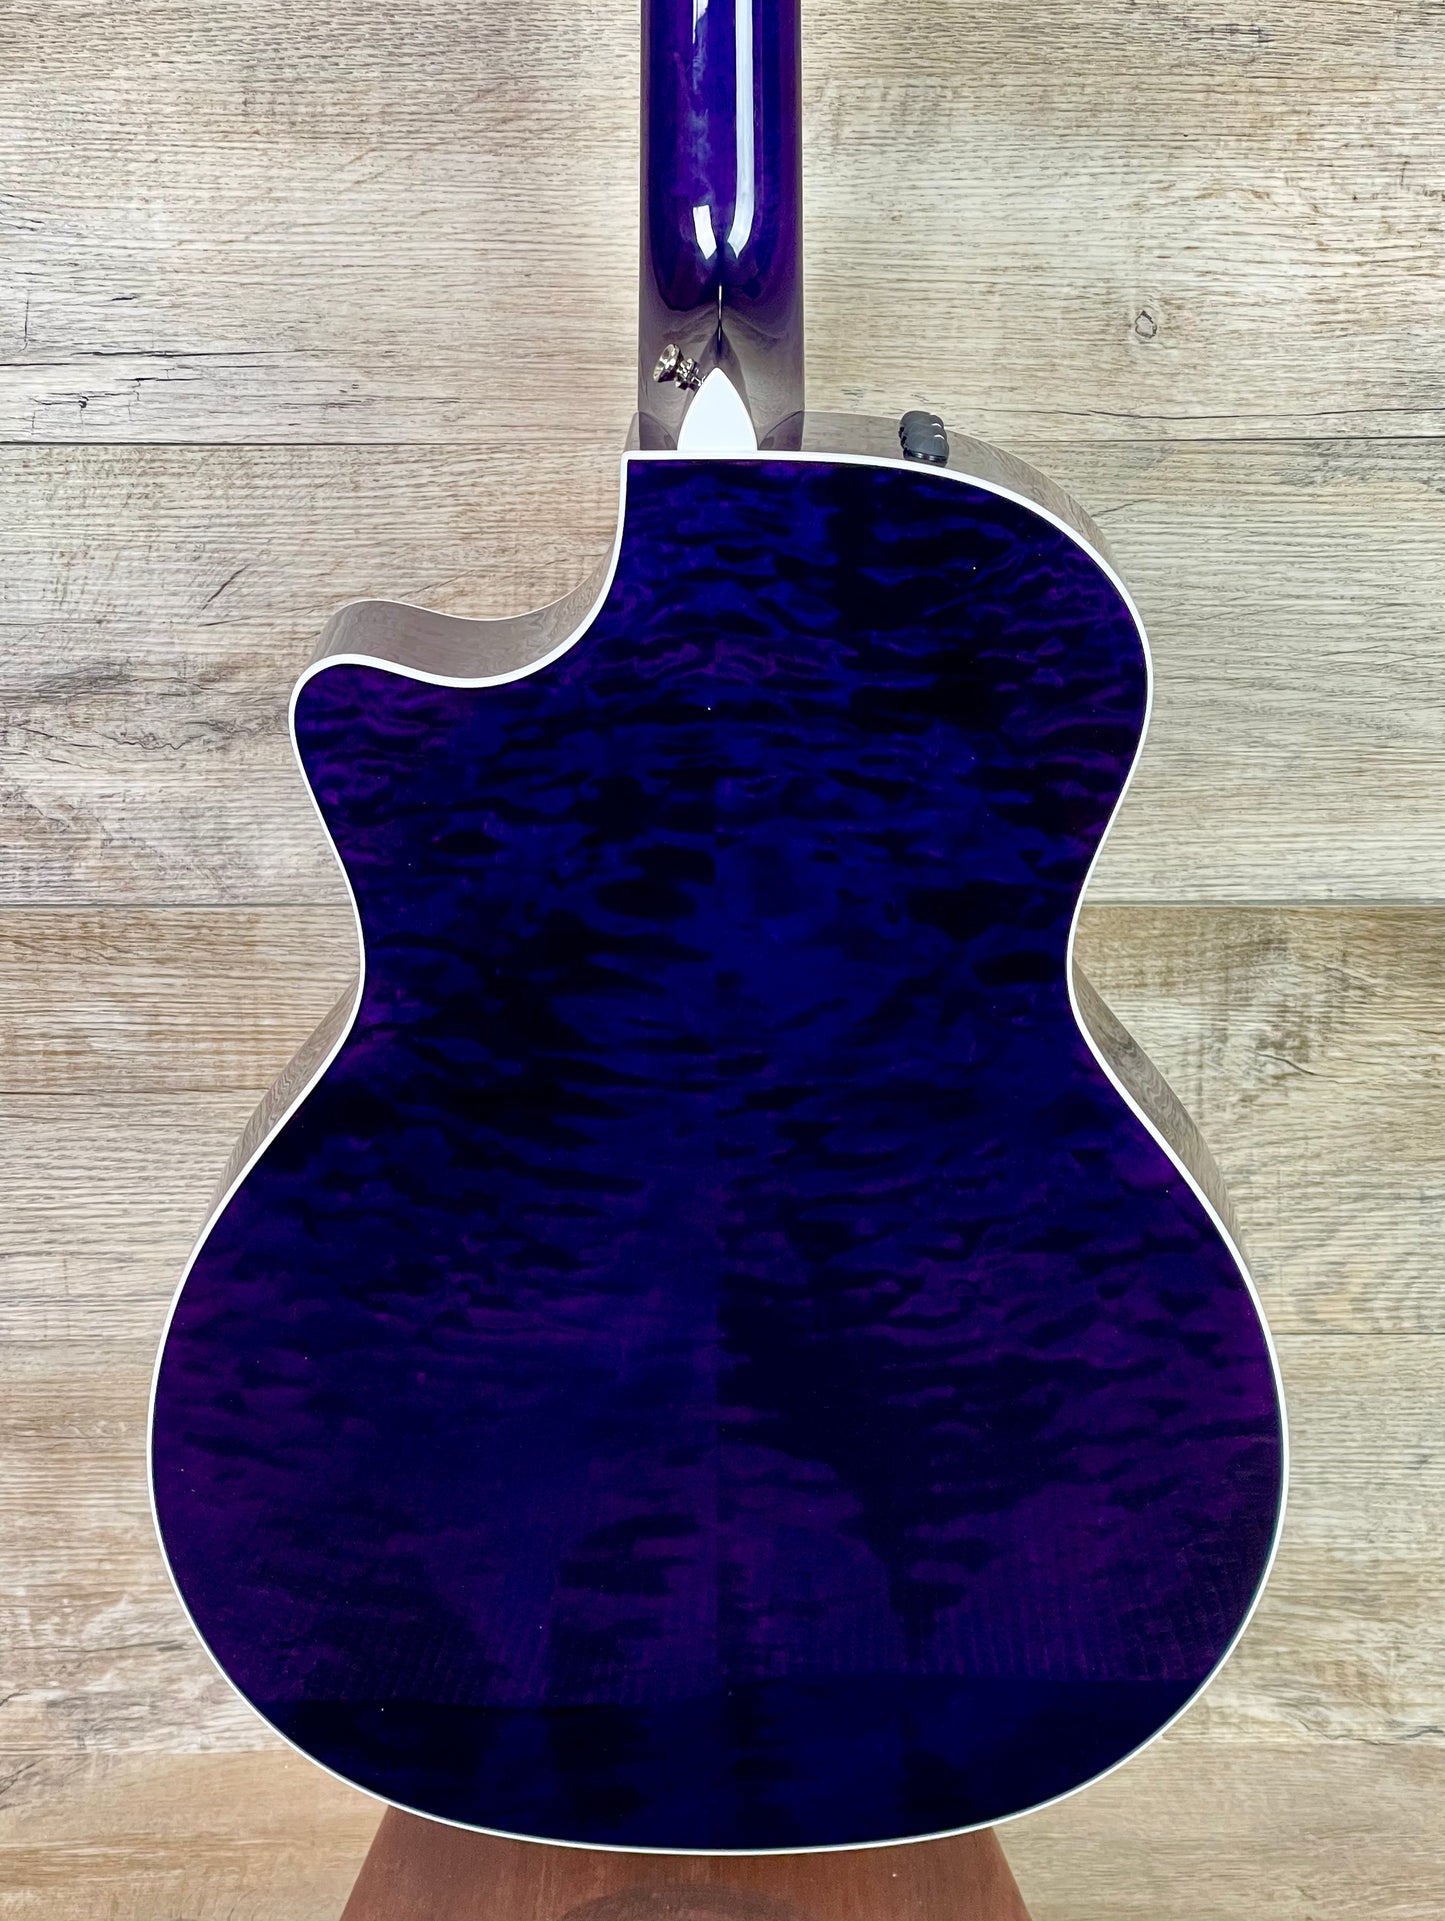 Taylor Custom GA-12 #12113 12-String Purple Maple Quilt w/case